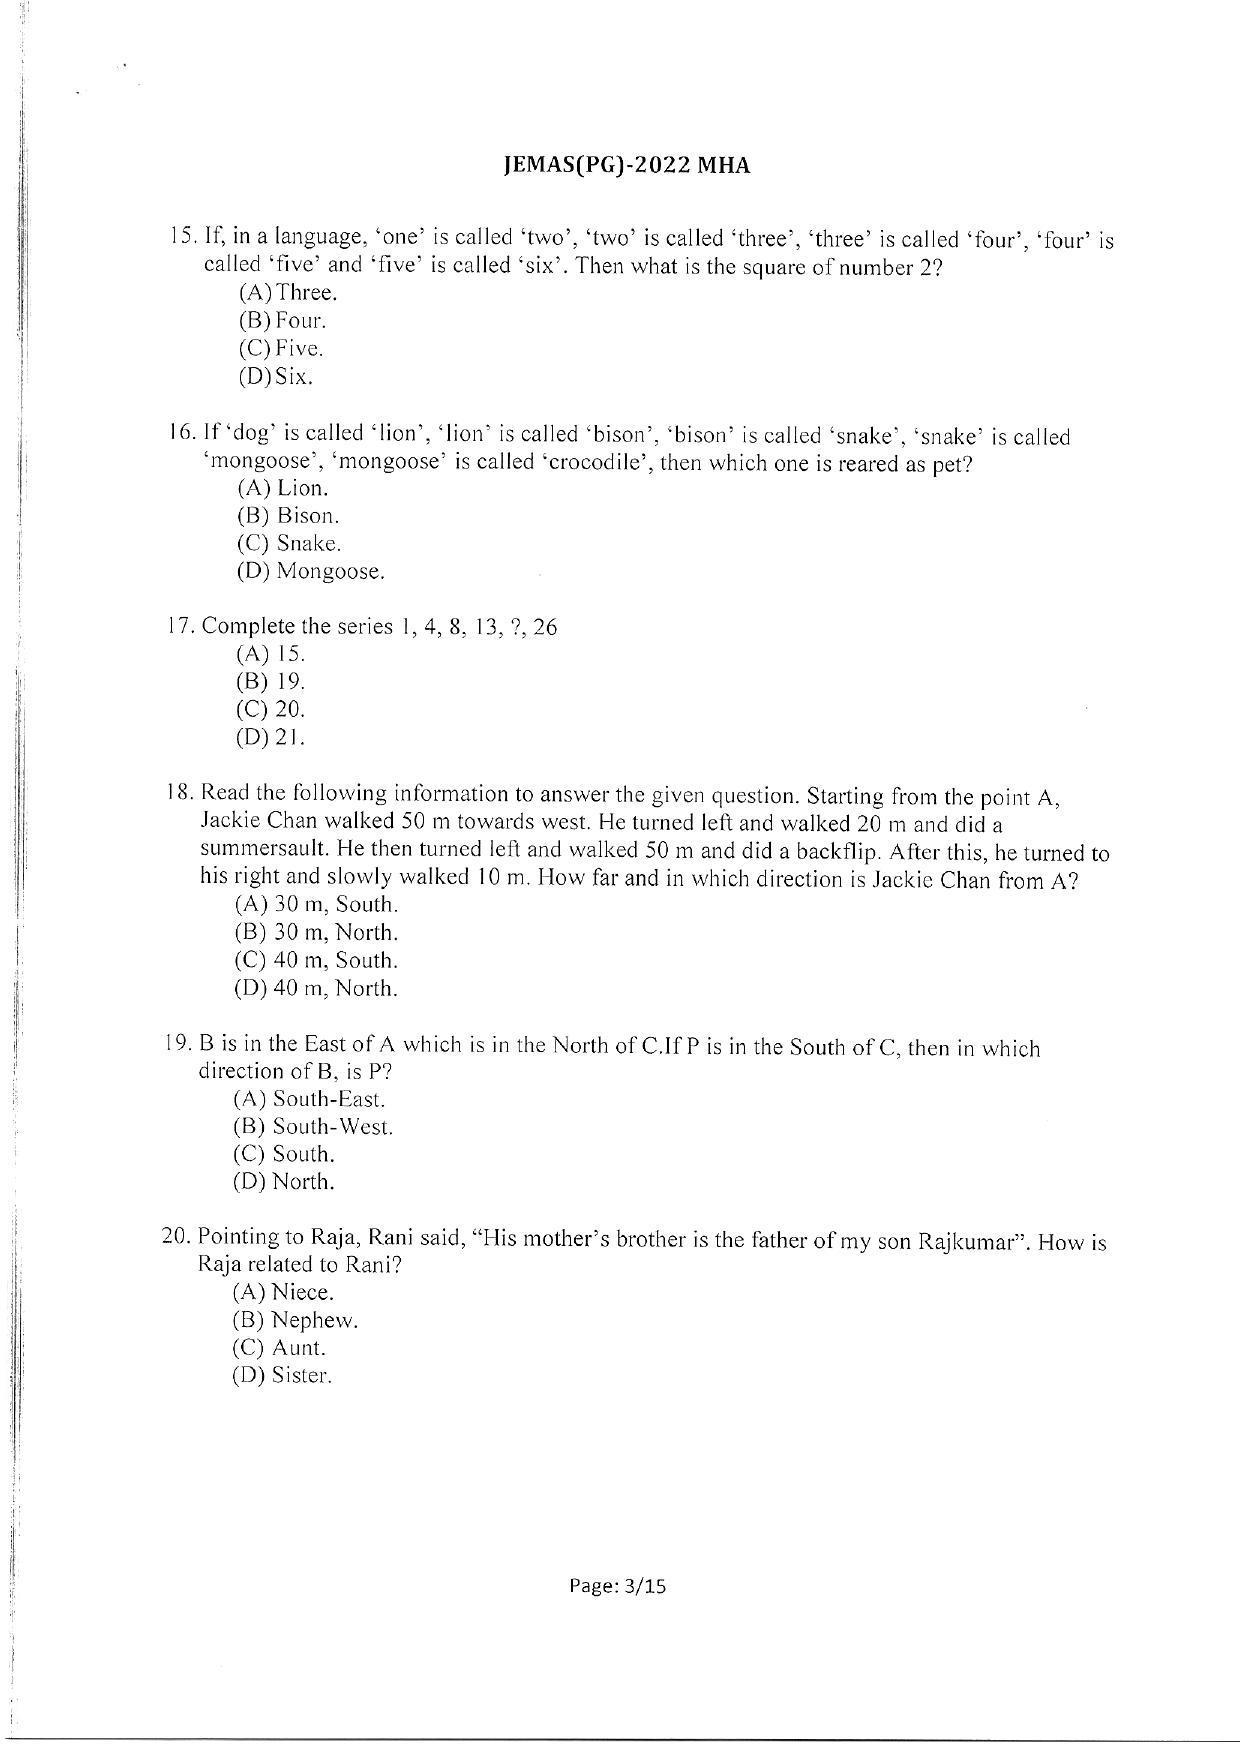 WBJEEB JEMAS (PG) 2022 MHA Question Paper - Page 5